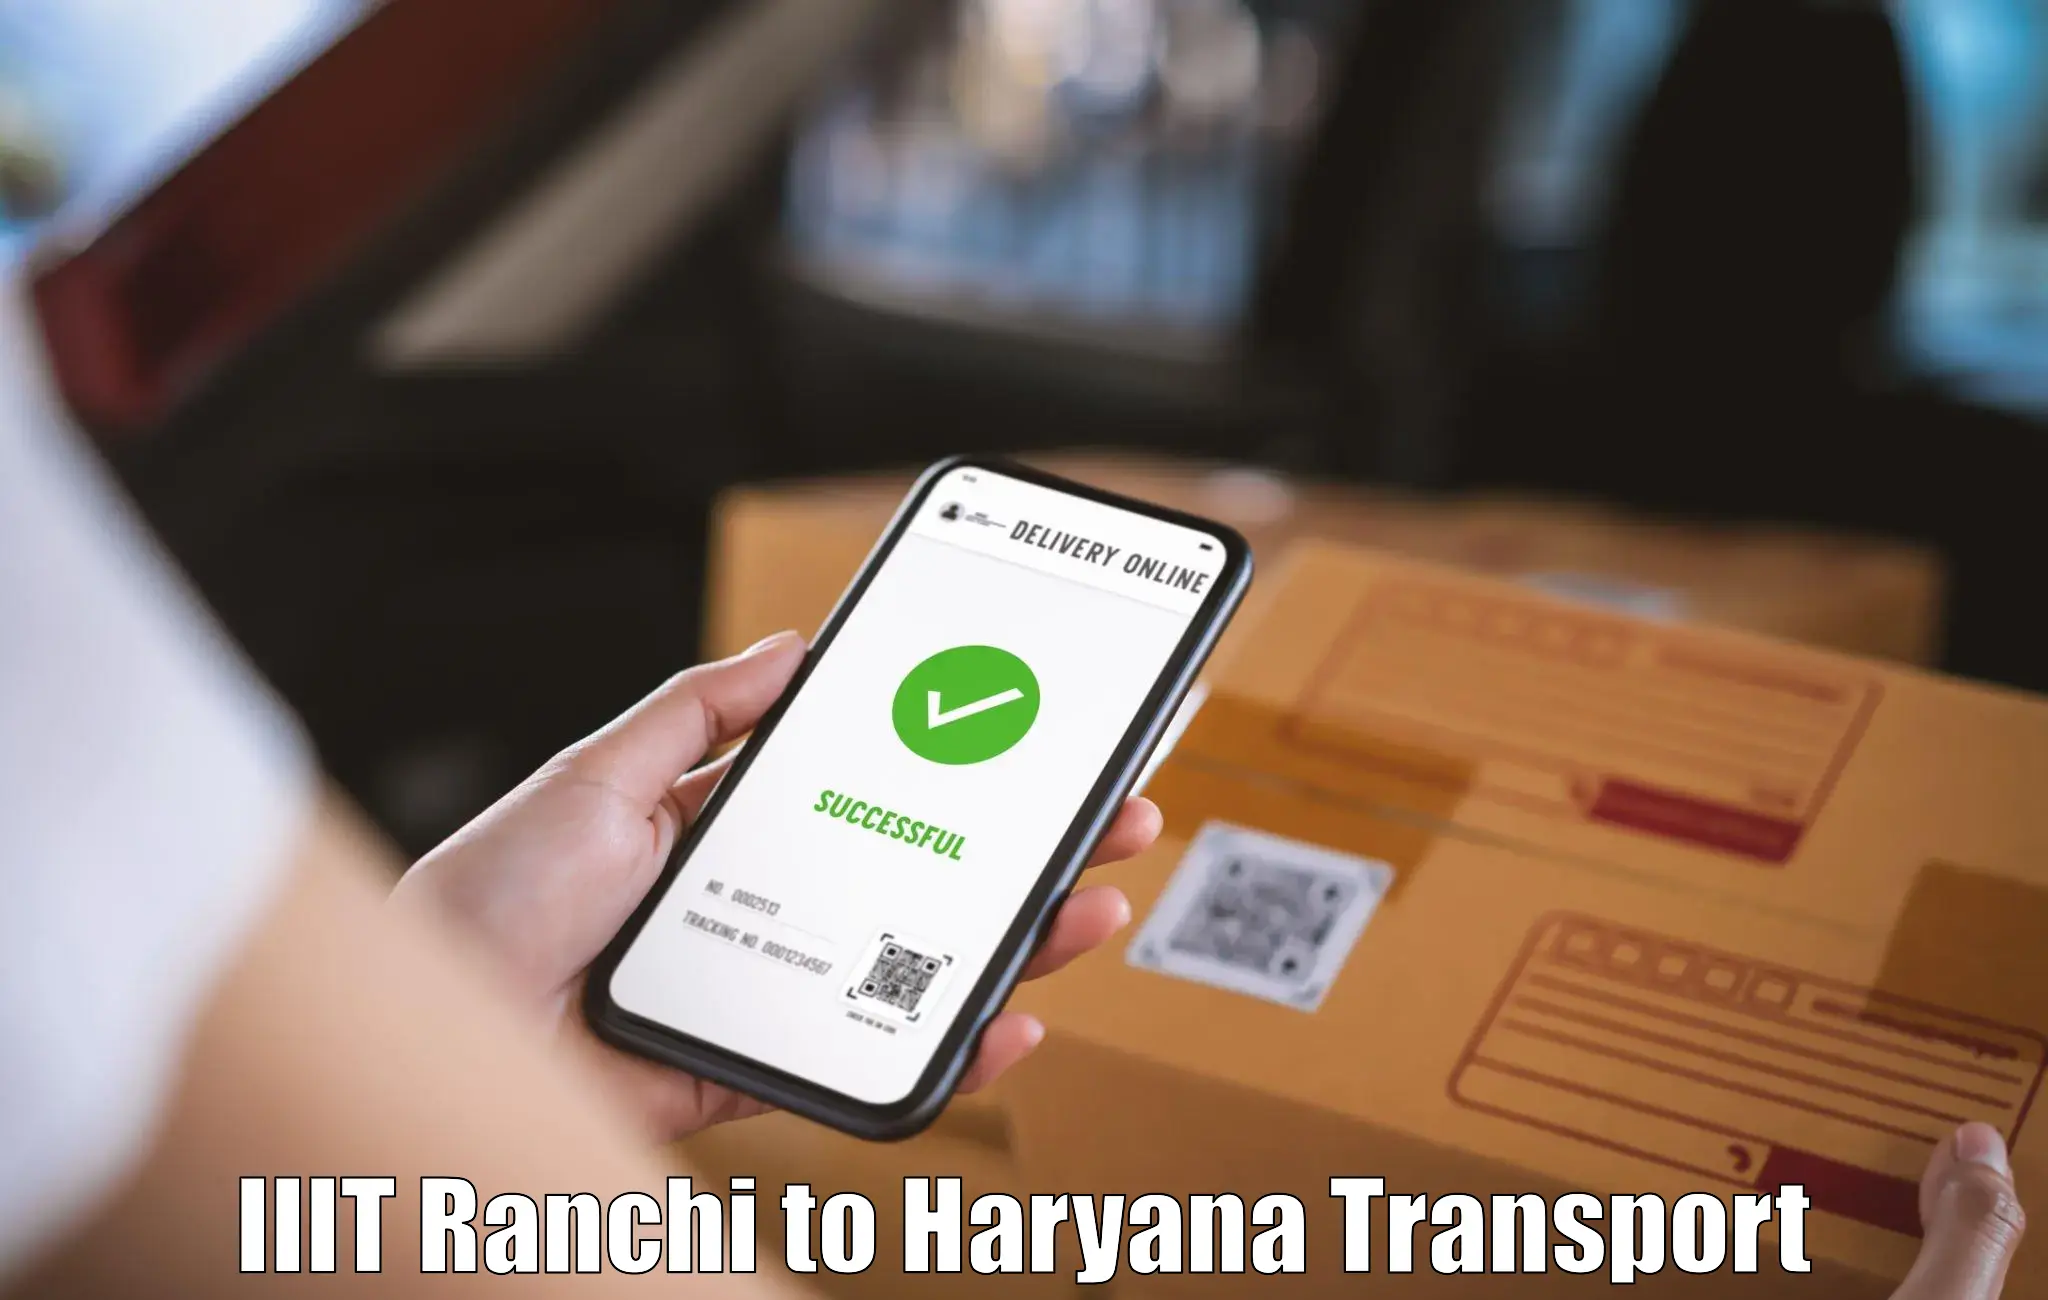 Luggage transport services IIIT Ranchi to Gurugram